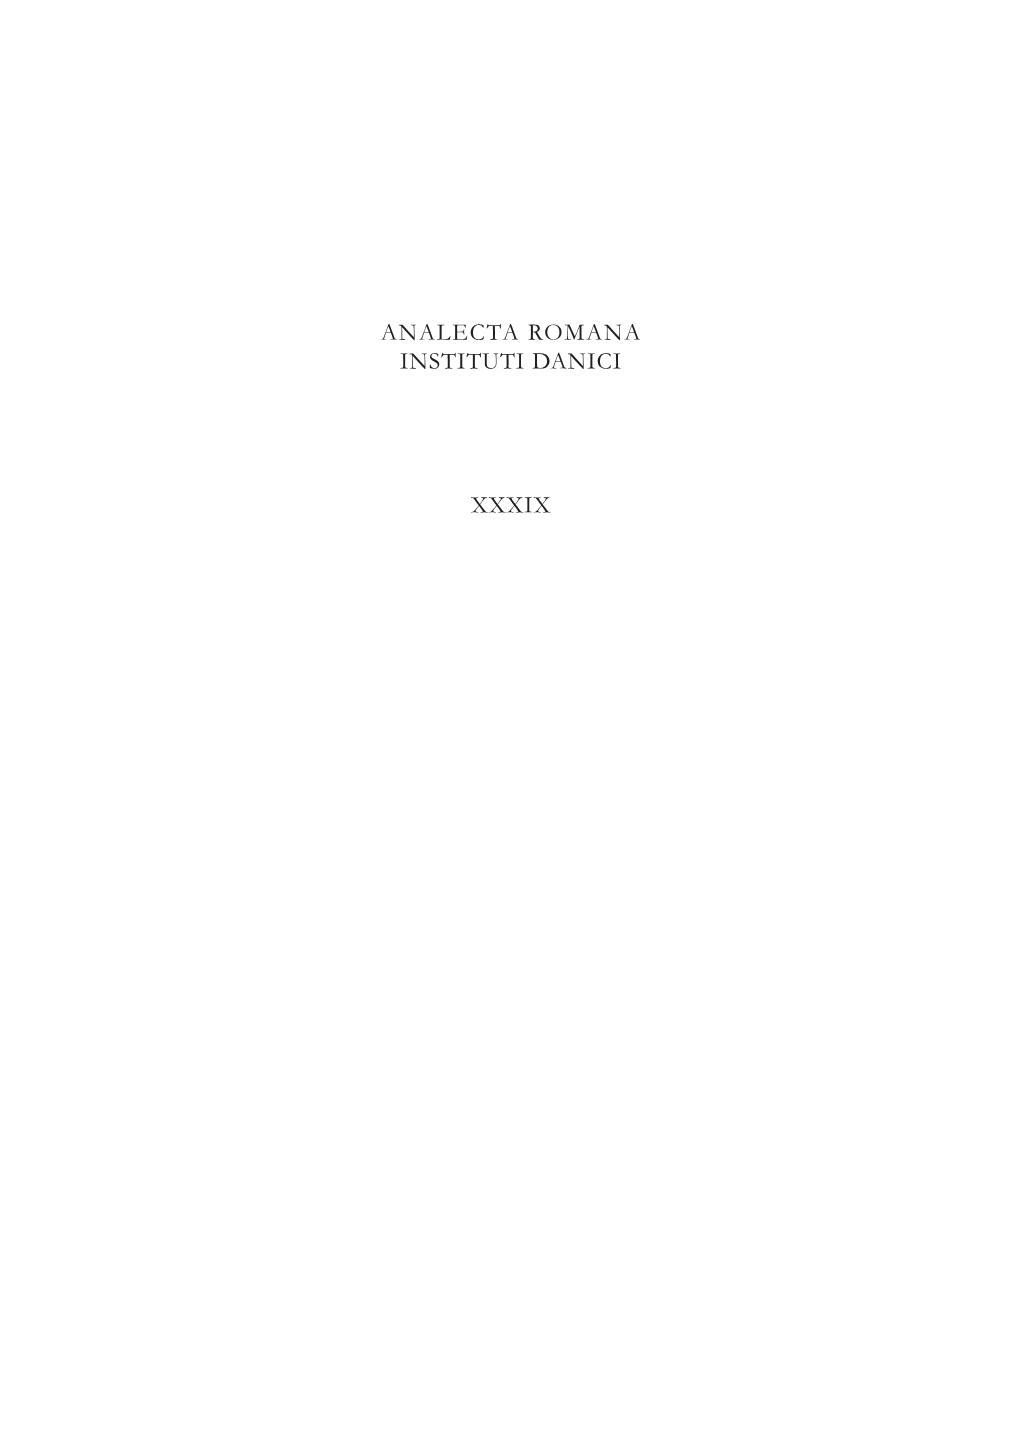 ANALECTA ROMANA INSTITUTI DANICI XXXIX © 2014 Accademia Di Danimarca ISSN 2035-2506